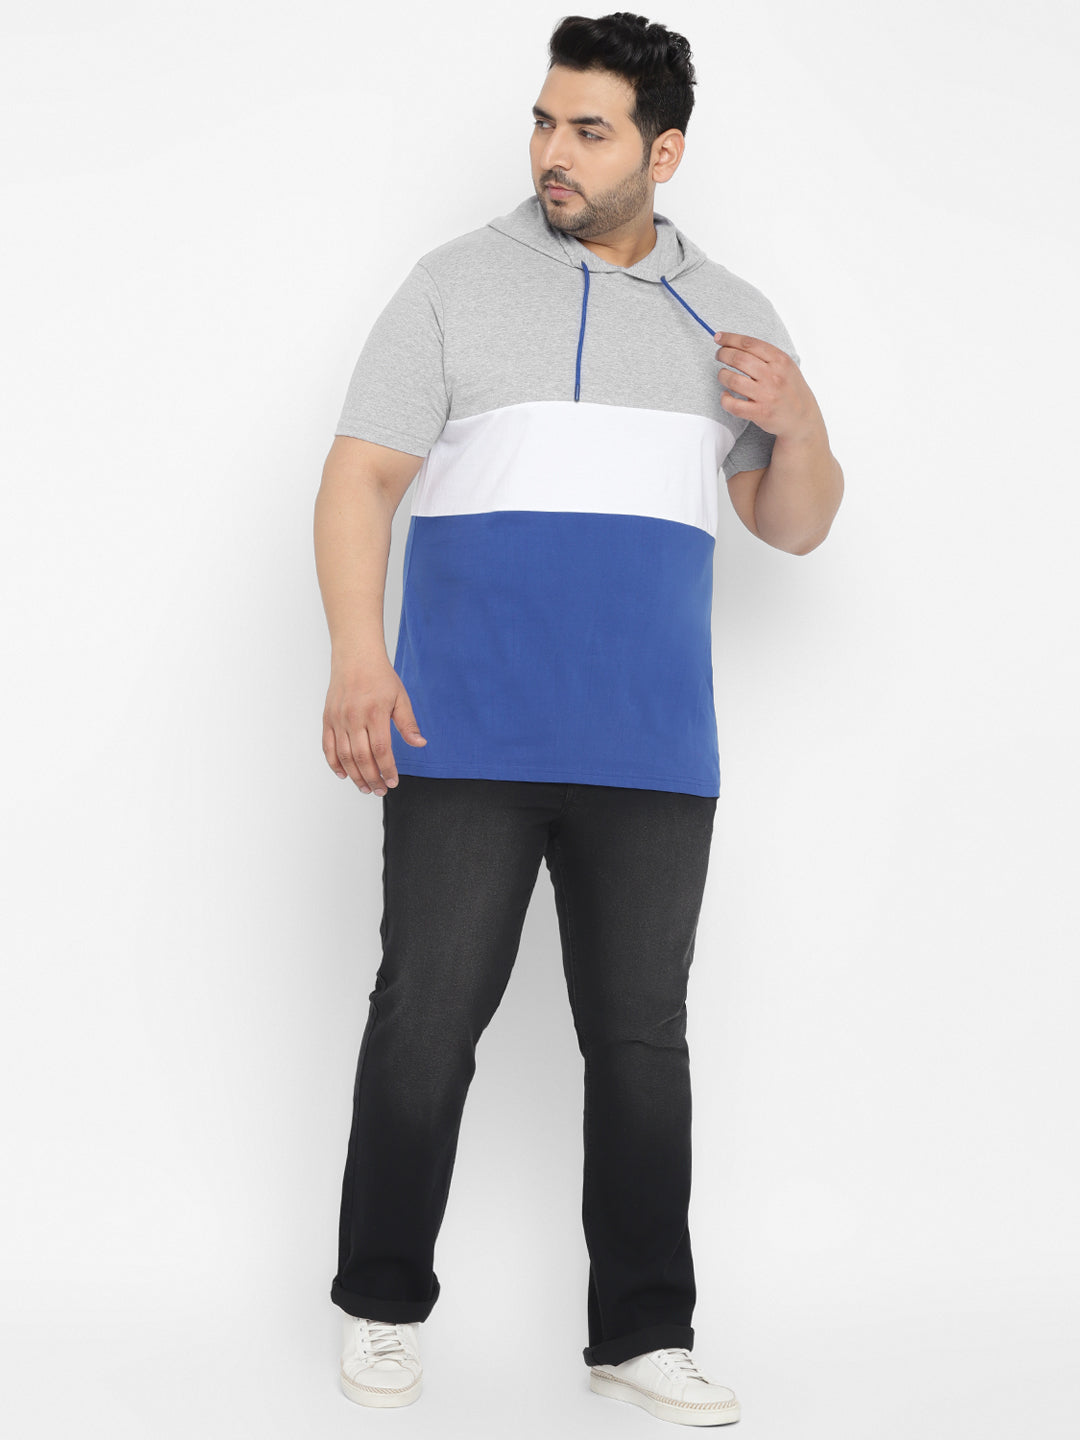 Plus Men's Grey, White, Royal Blue Color-Block Hooded Neck Regular Fit Half Sleeve Cotton T-Shirt